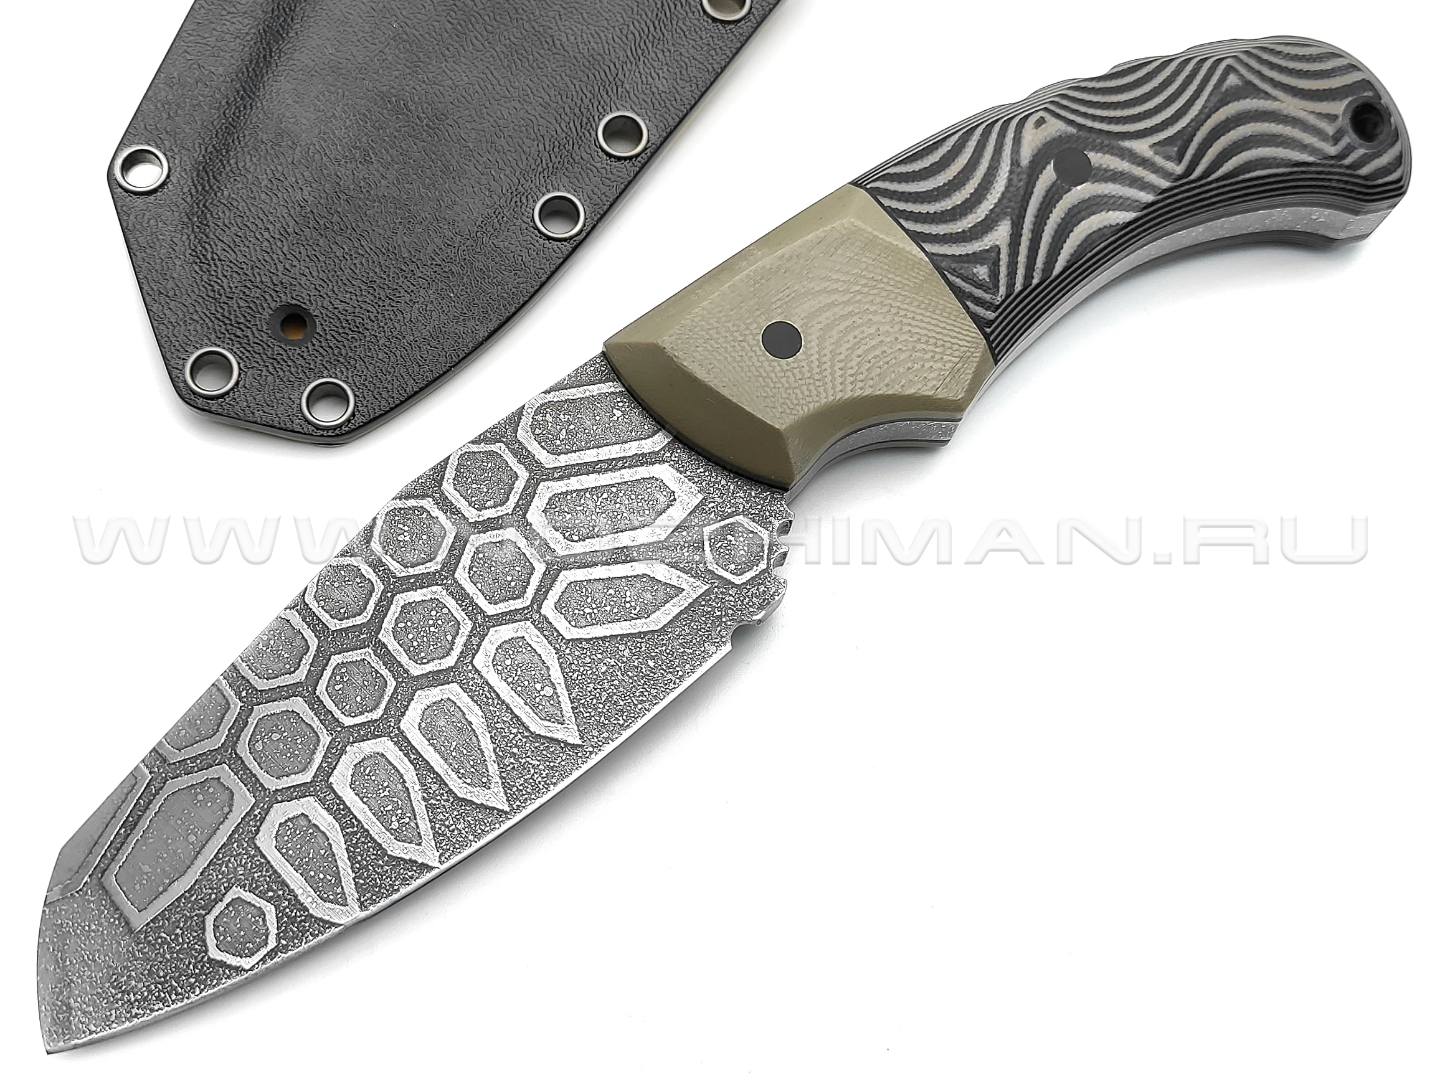 Волчий Век нож Сквозняк Custom Brutal Edition сталь 1.4116 WA, рукоять G10 black & tan, Kydex kryptek